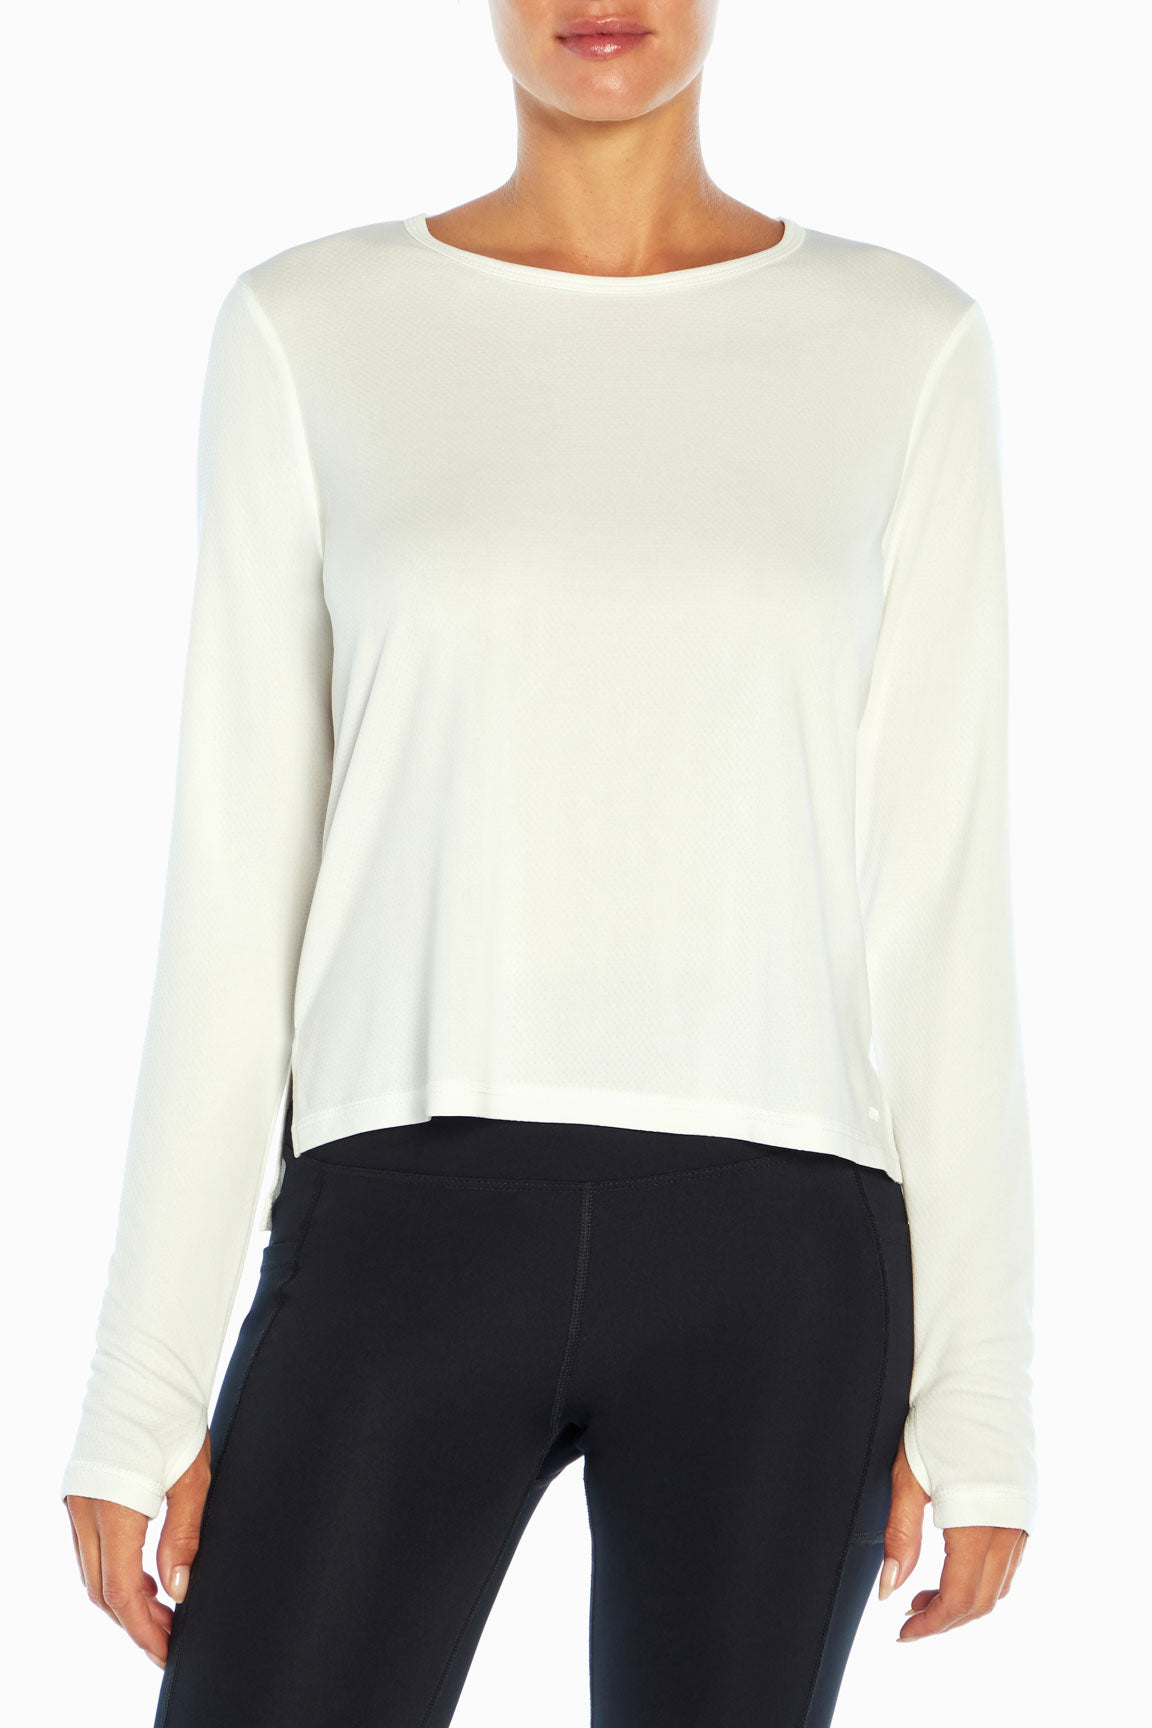 LULULEMON Women's(No Size Tag) Top Long Sleeve Shirt Side Slits Black